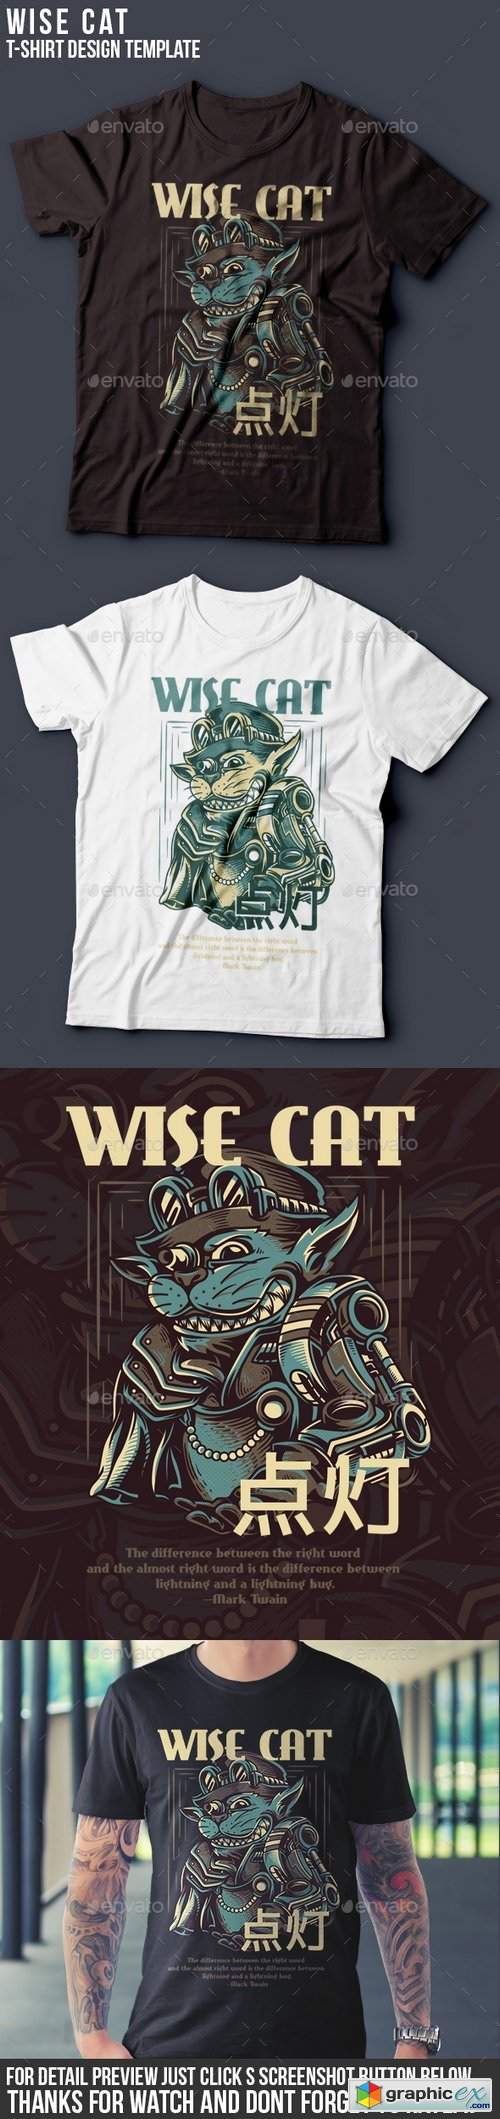 Wise Cat T-Shirt Design